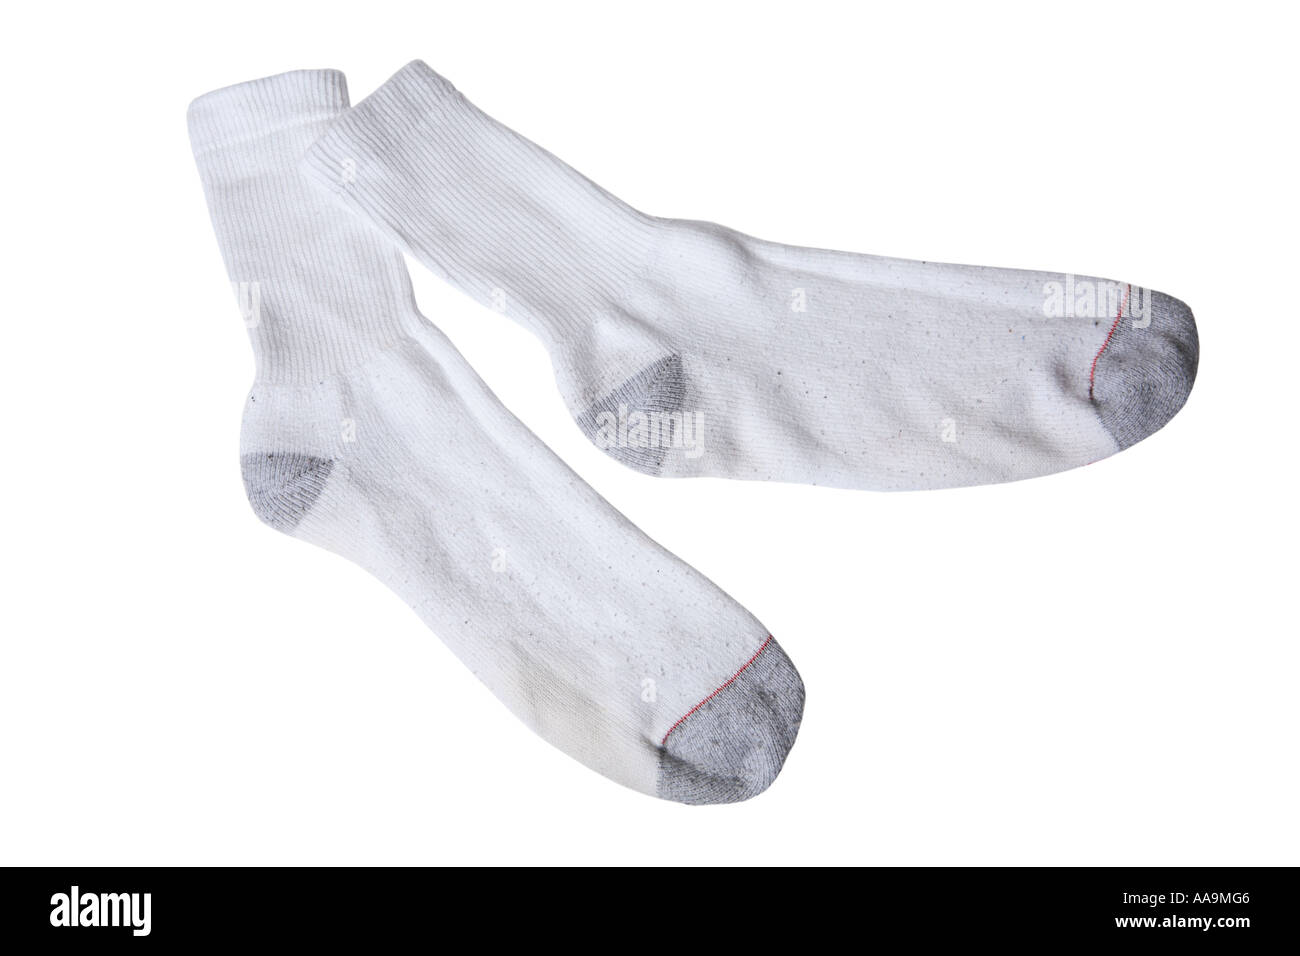 Pair of white athletic socks Stock Photo